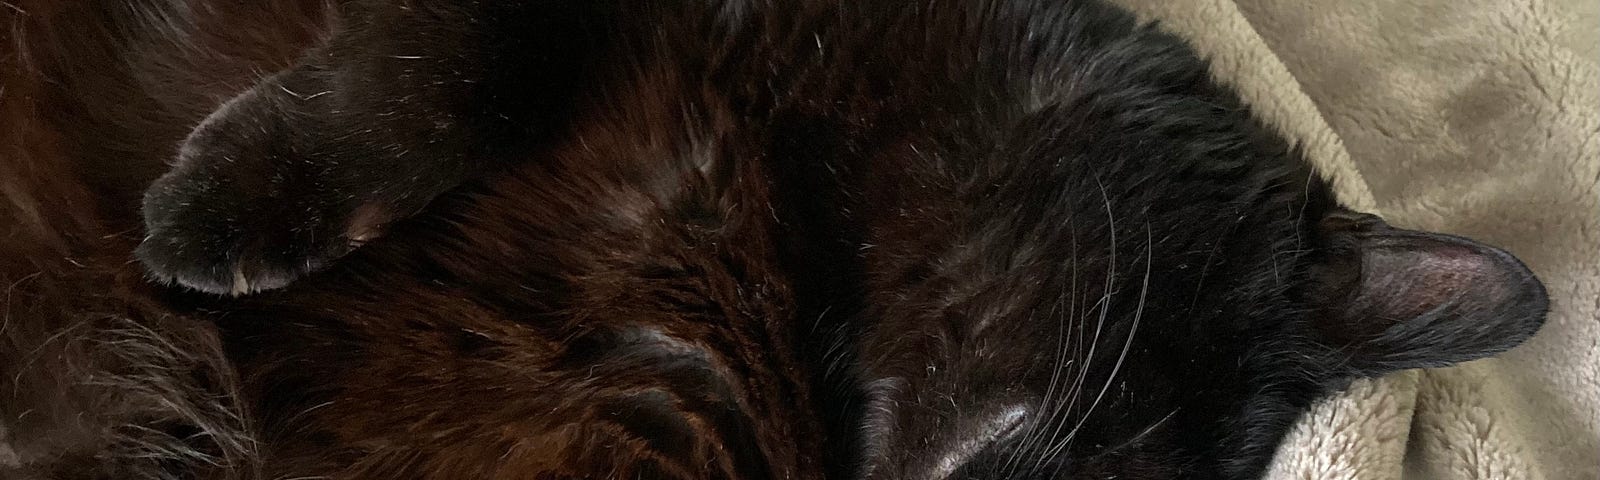 a black cat sleeping on a plush blanket